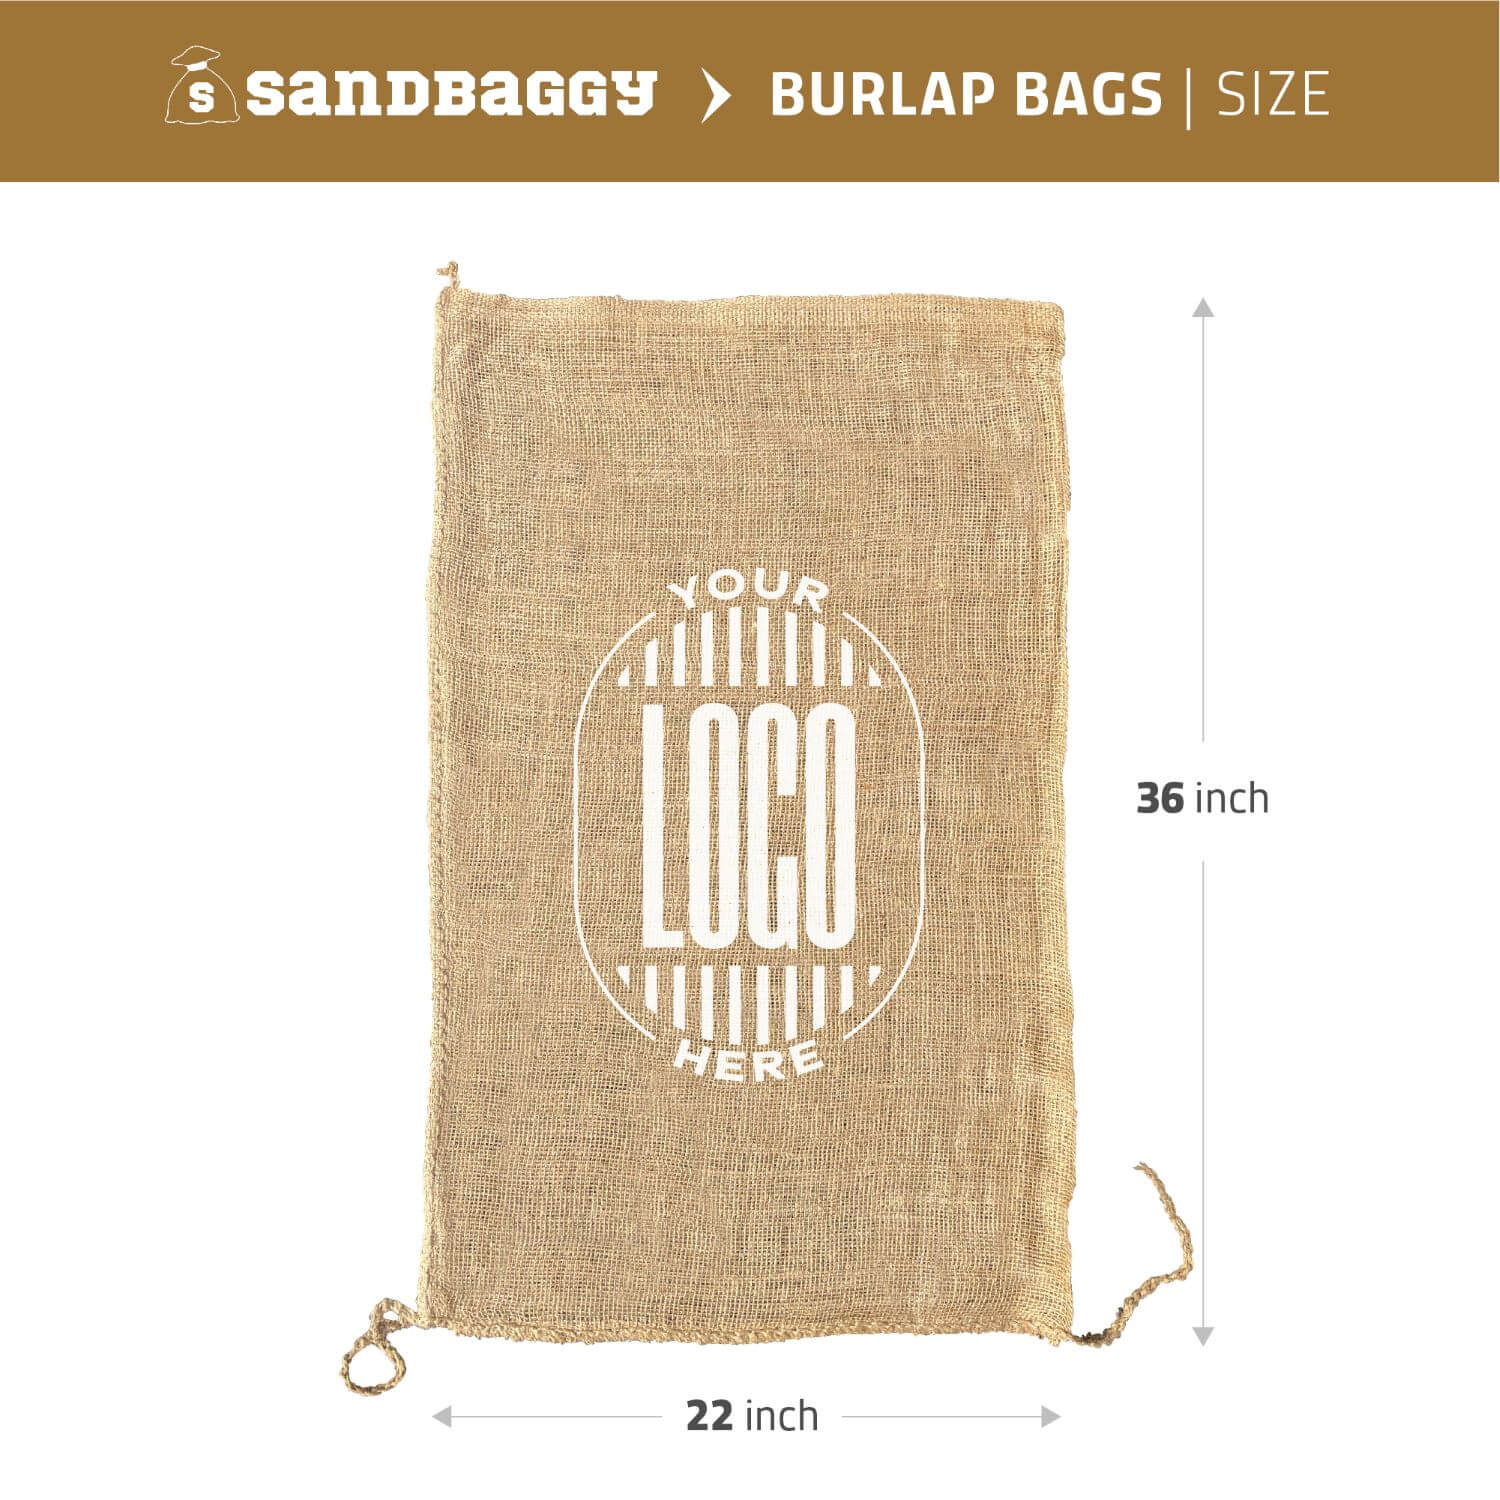 Large Printed Bags - Wholesale - Sandbaggy